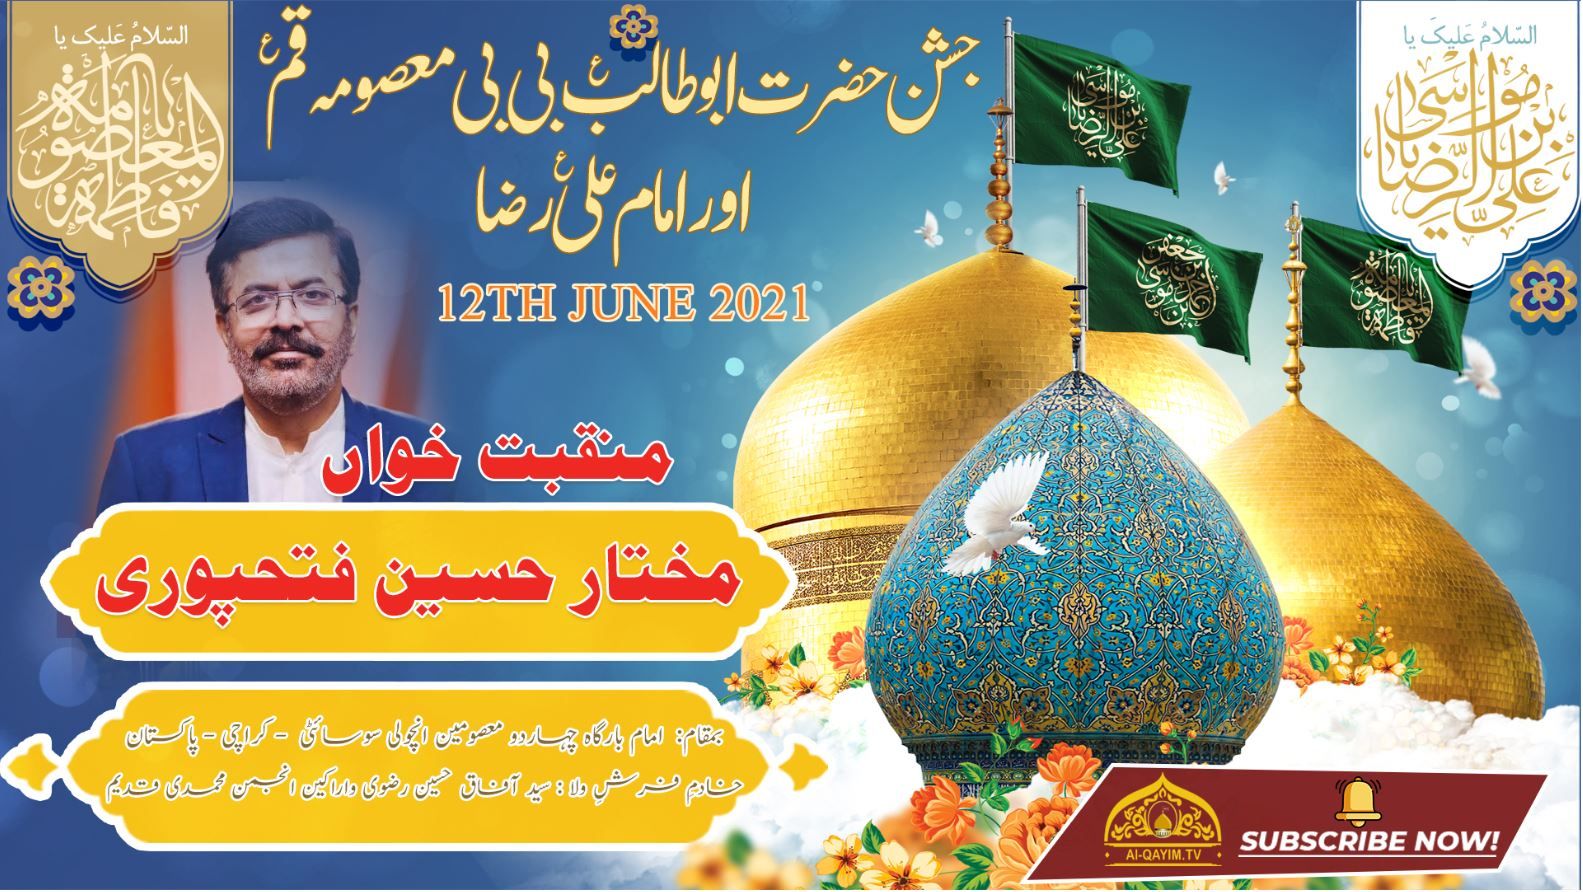 Manqabat | Mukhtar Hussain | Jashan Bibi Masooma & Imam Ali Raza - 12 June 2021 - Ancholi - Karachi